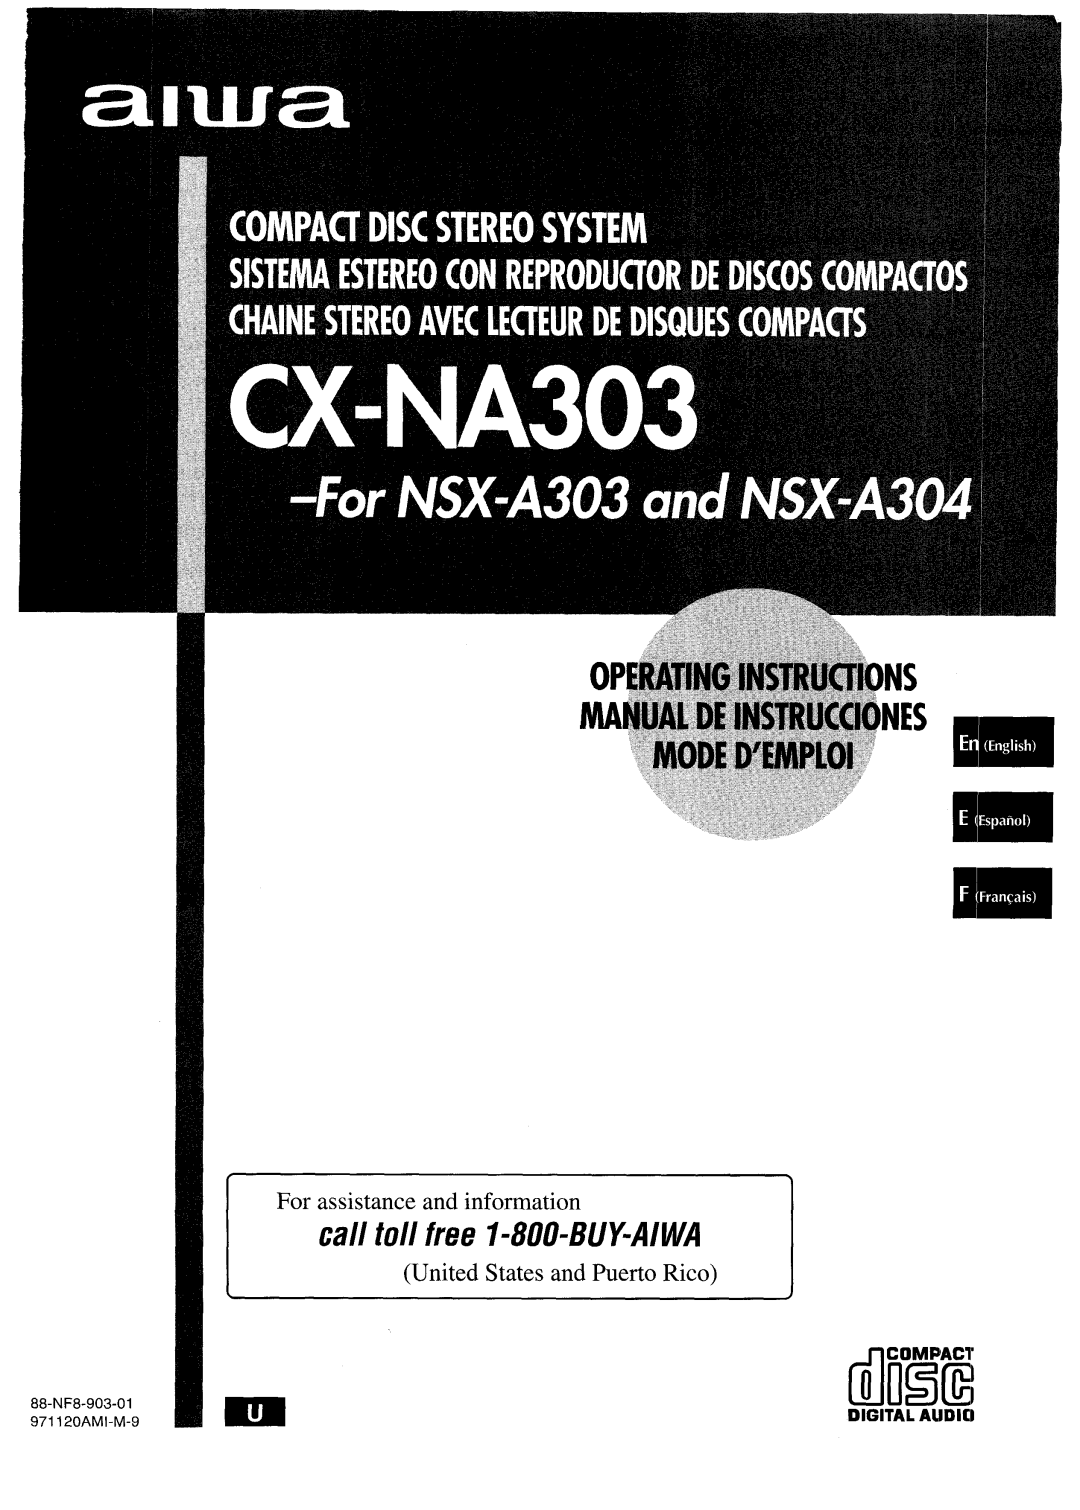 Aiwa NSX-A304, NSX-A303, CX-NA303 manual Call toll free I-800-BUY-AIWA, Digital Aijdio 